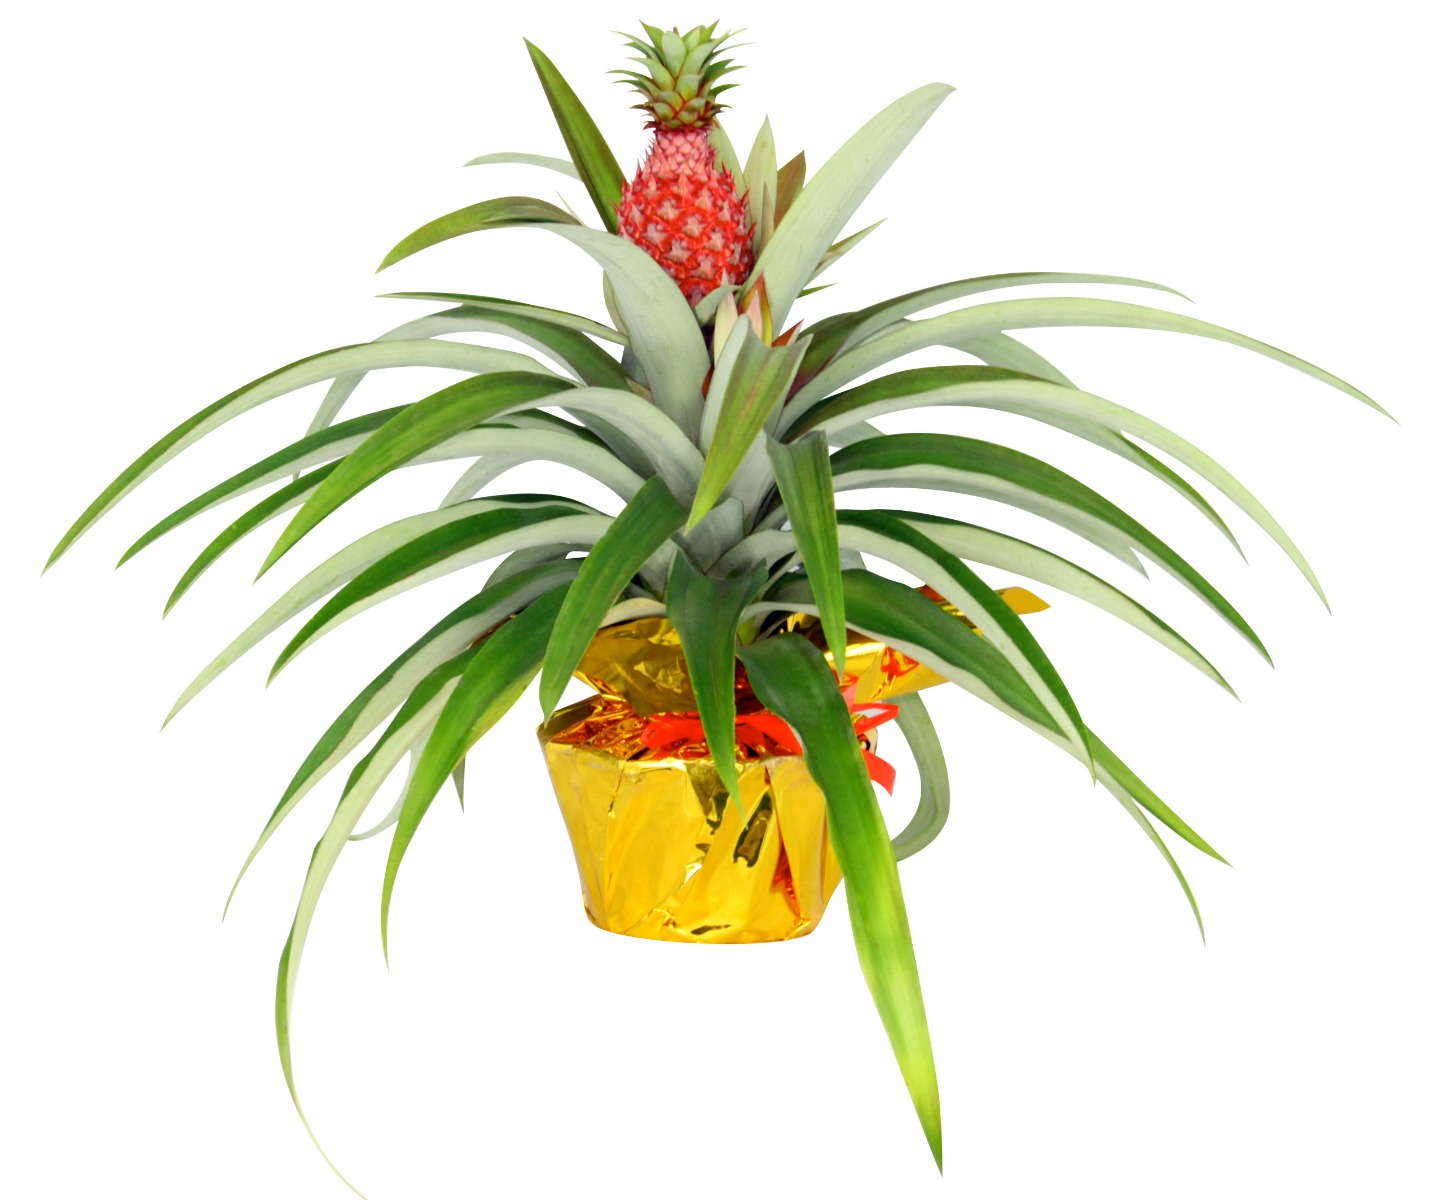 Pineapple (Ananas Bacteatus)